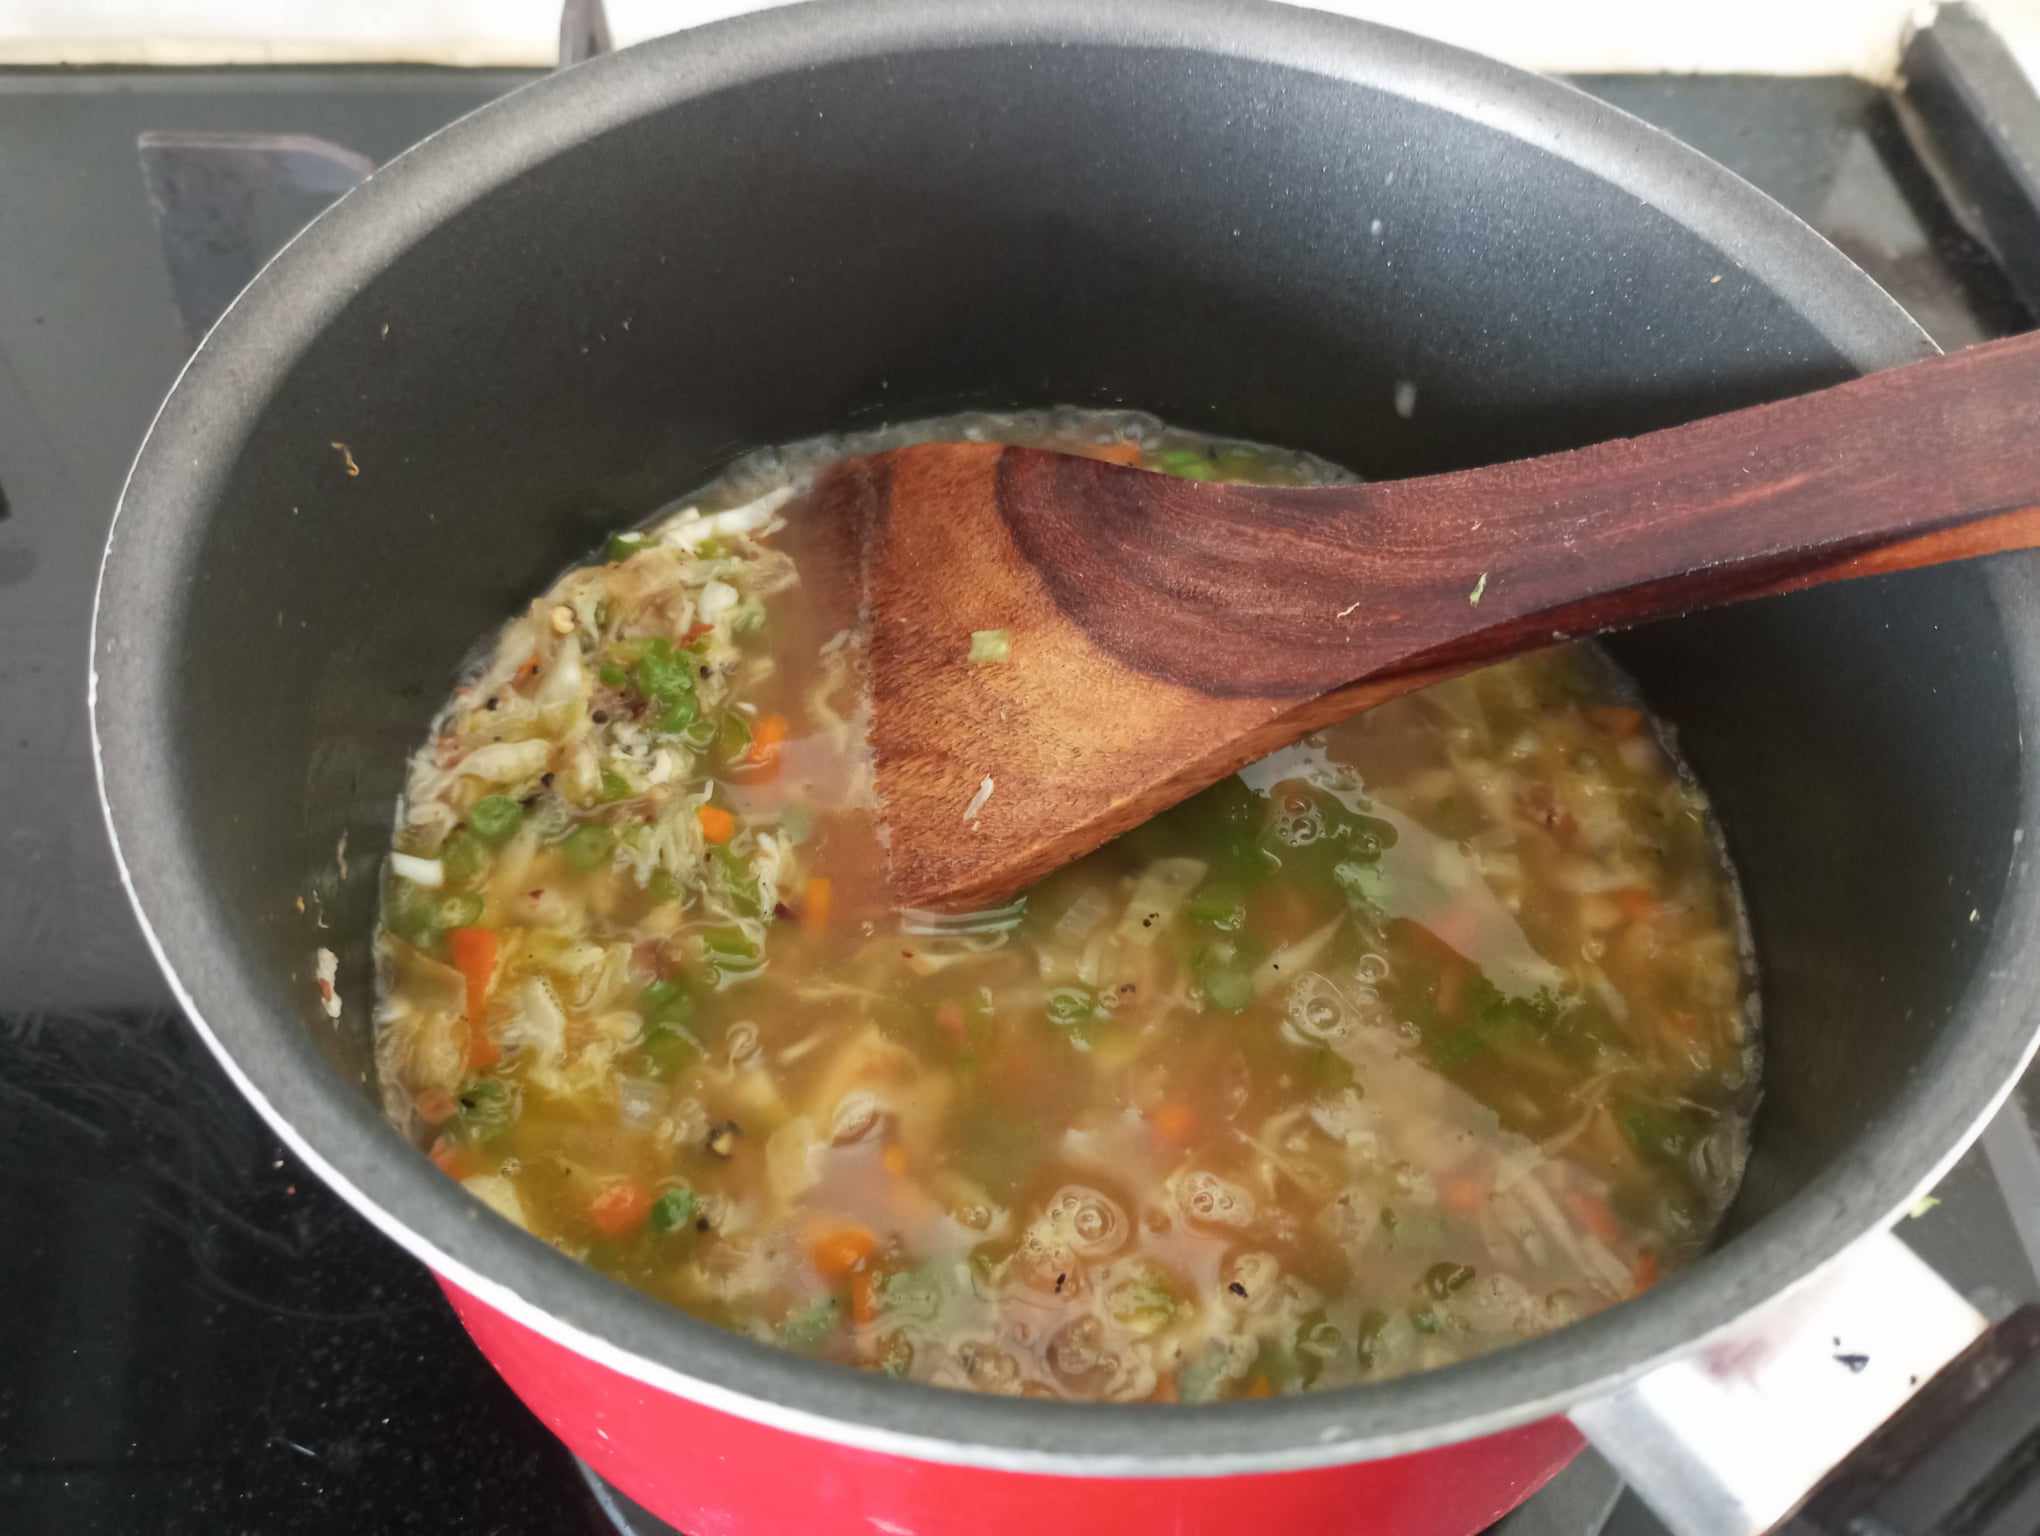 Vegetable Soup - add corn slurry